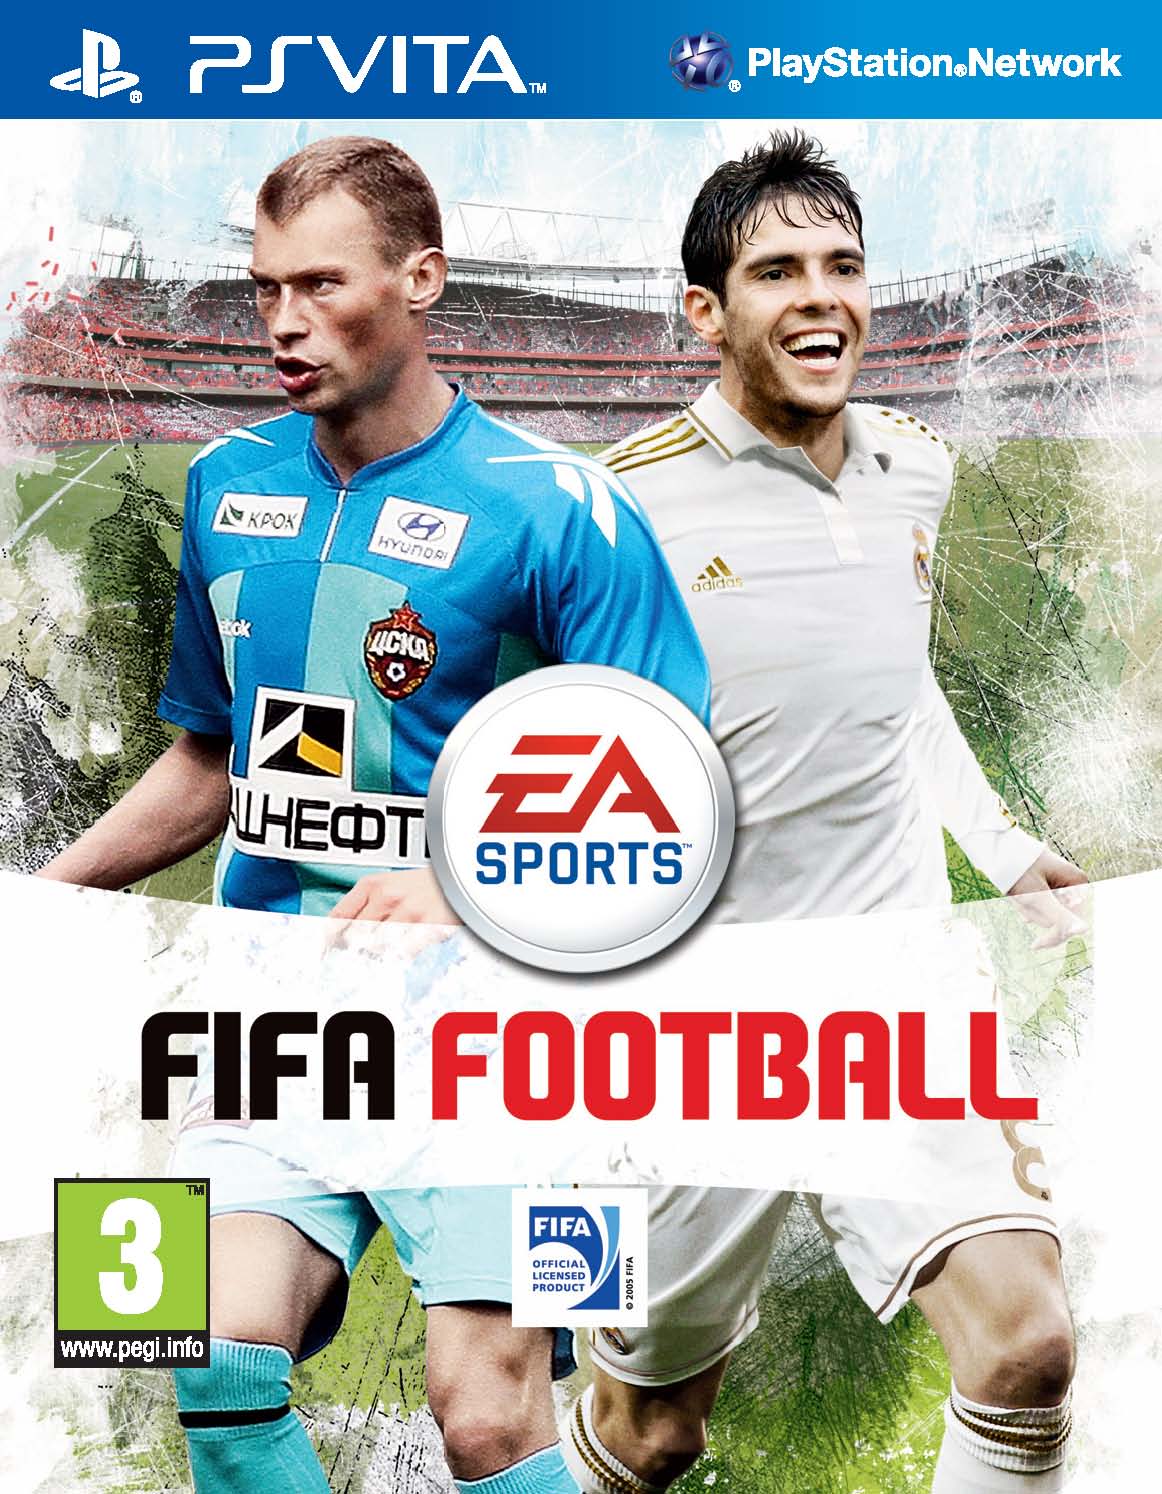 FIFA PS Vita. Плейстейшен футбол. FIFA 12 PS Vita. Football PLAYSTATION FIFA. Fifa vita